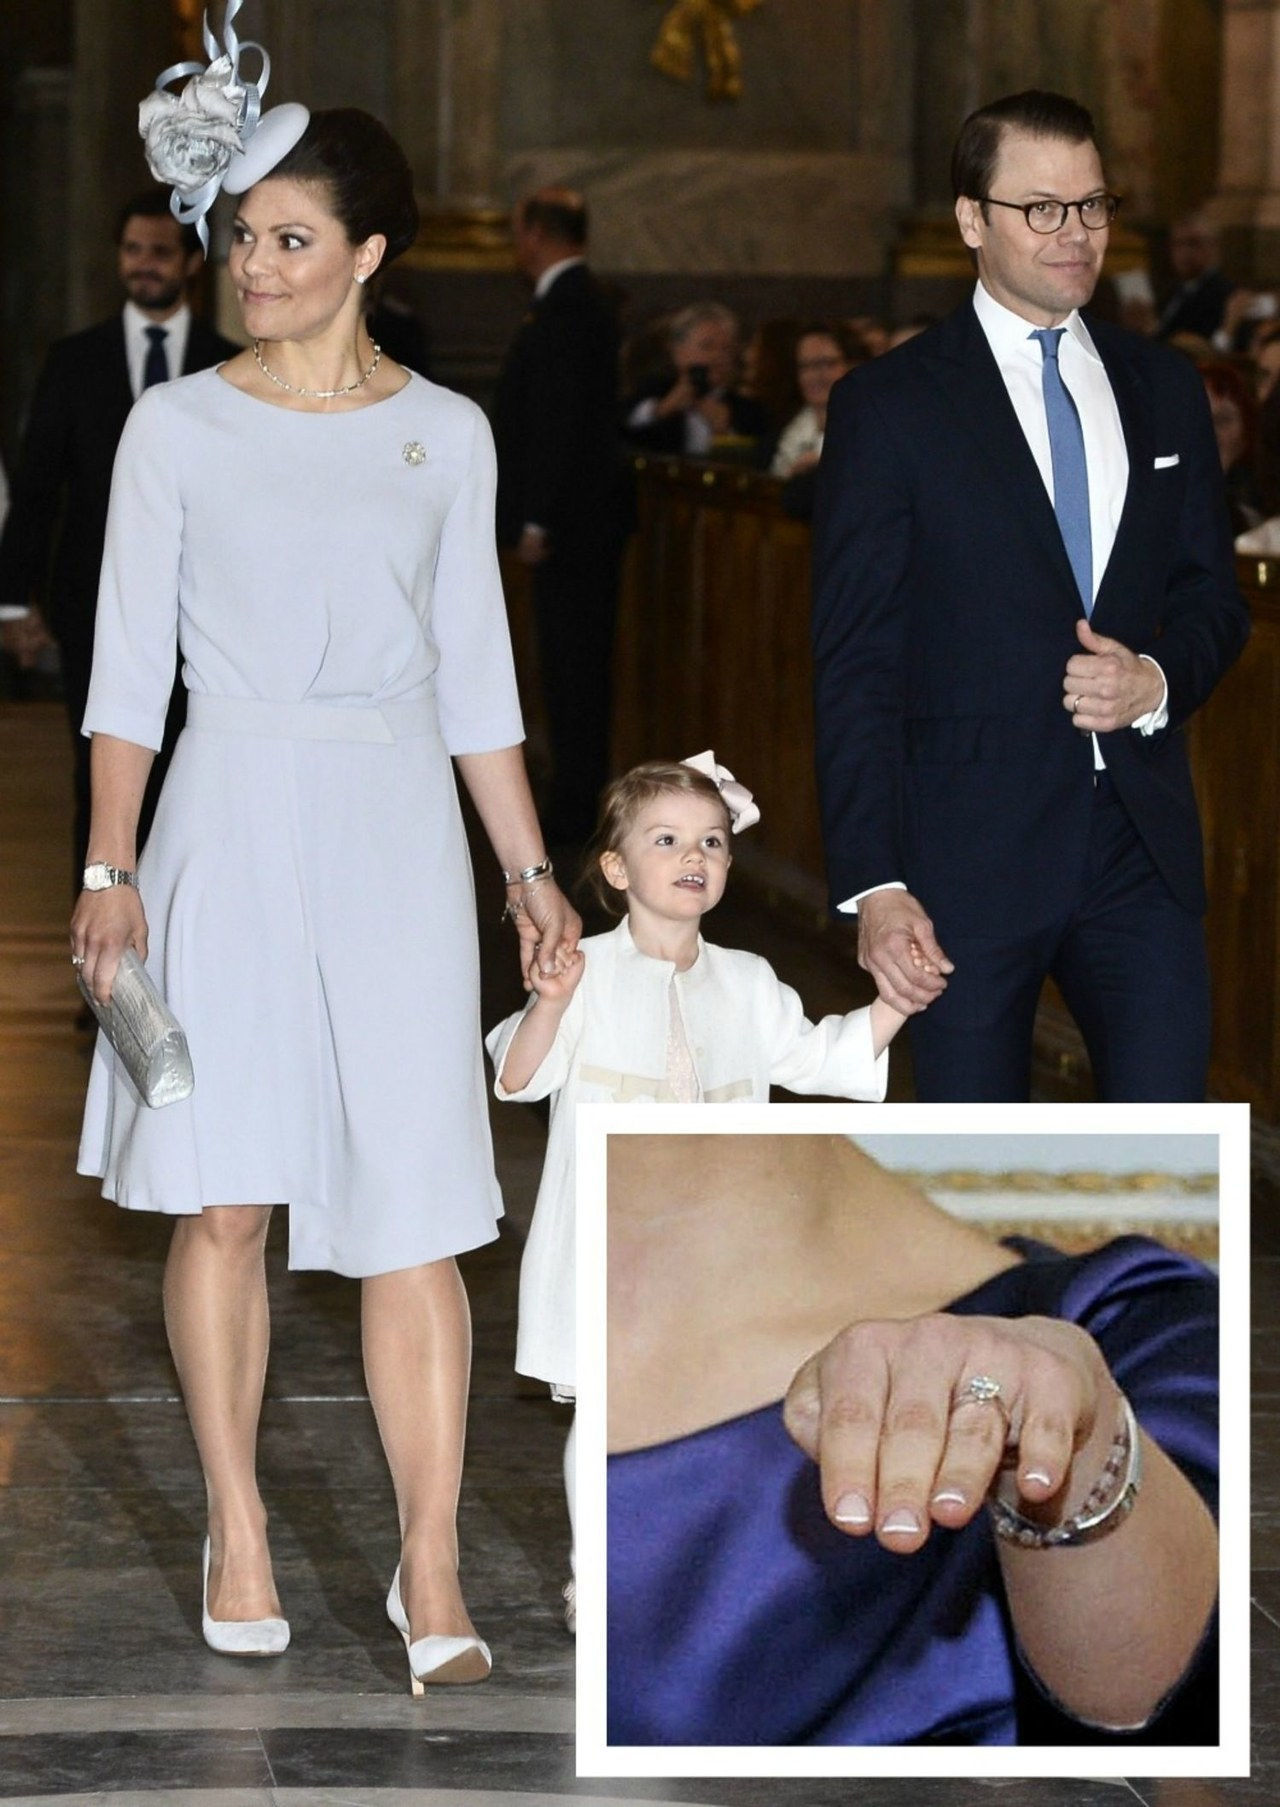 3 crown princess victoria engagement ring prince daniel westling royal wedding sweden 0517 getty